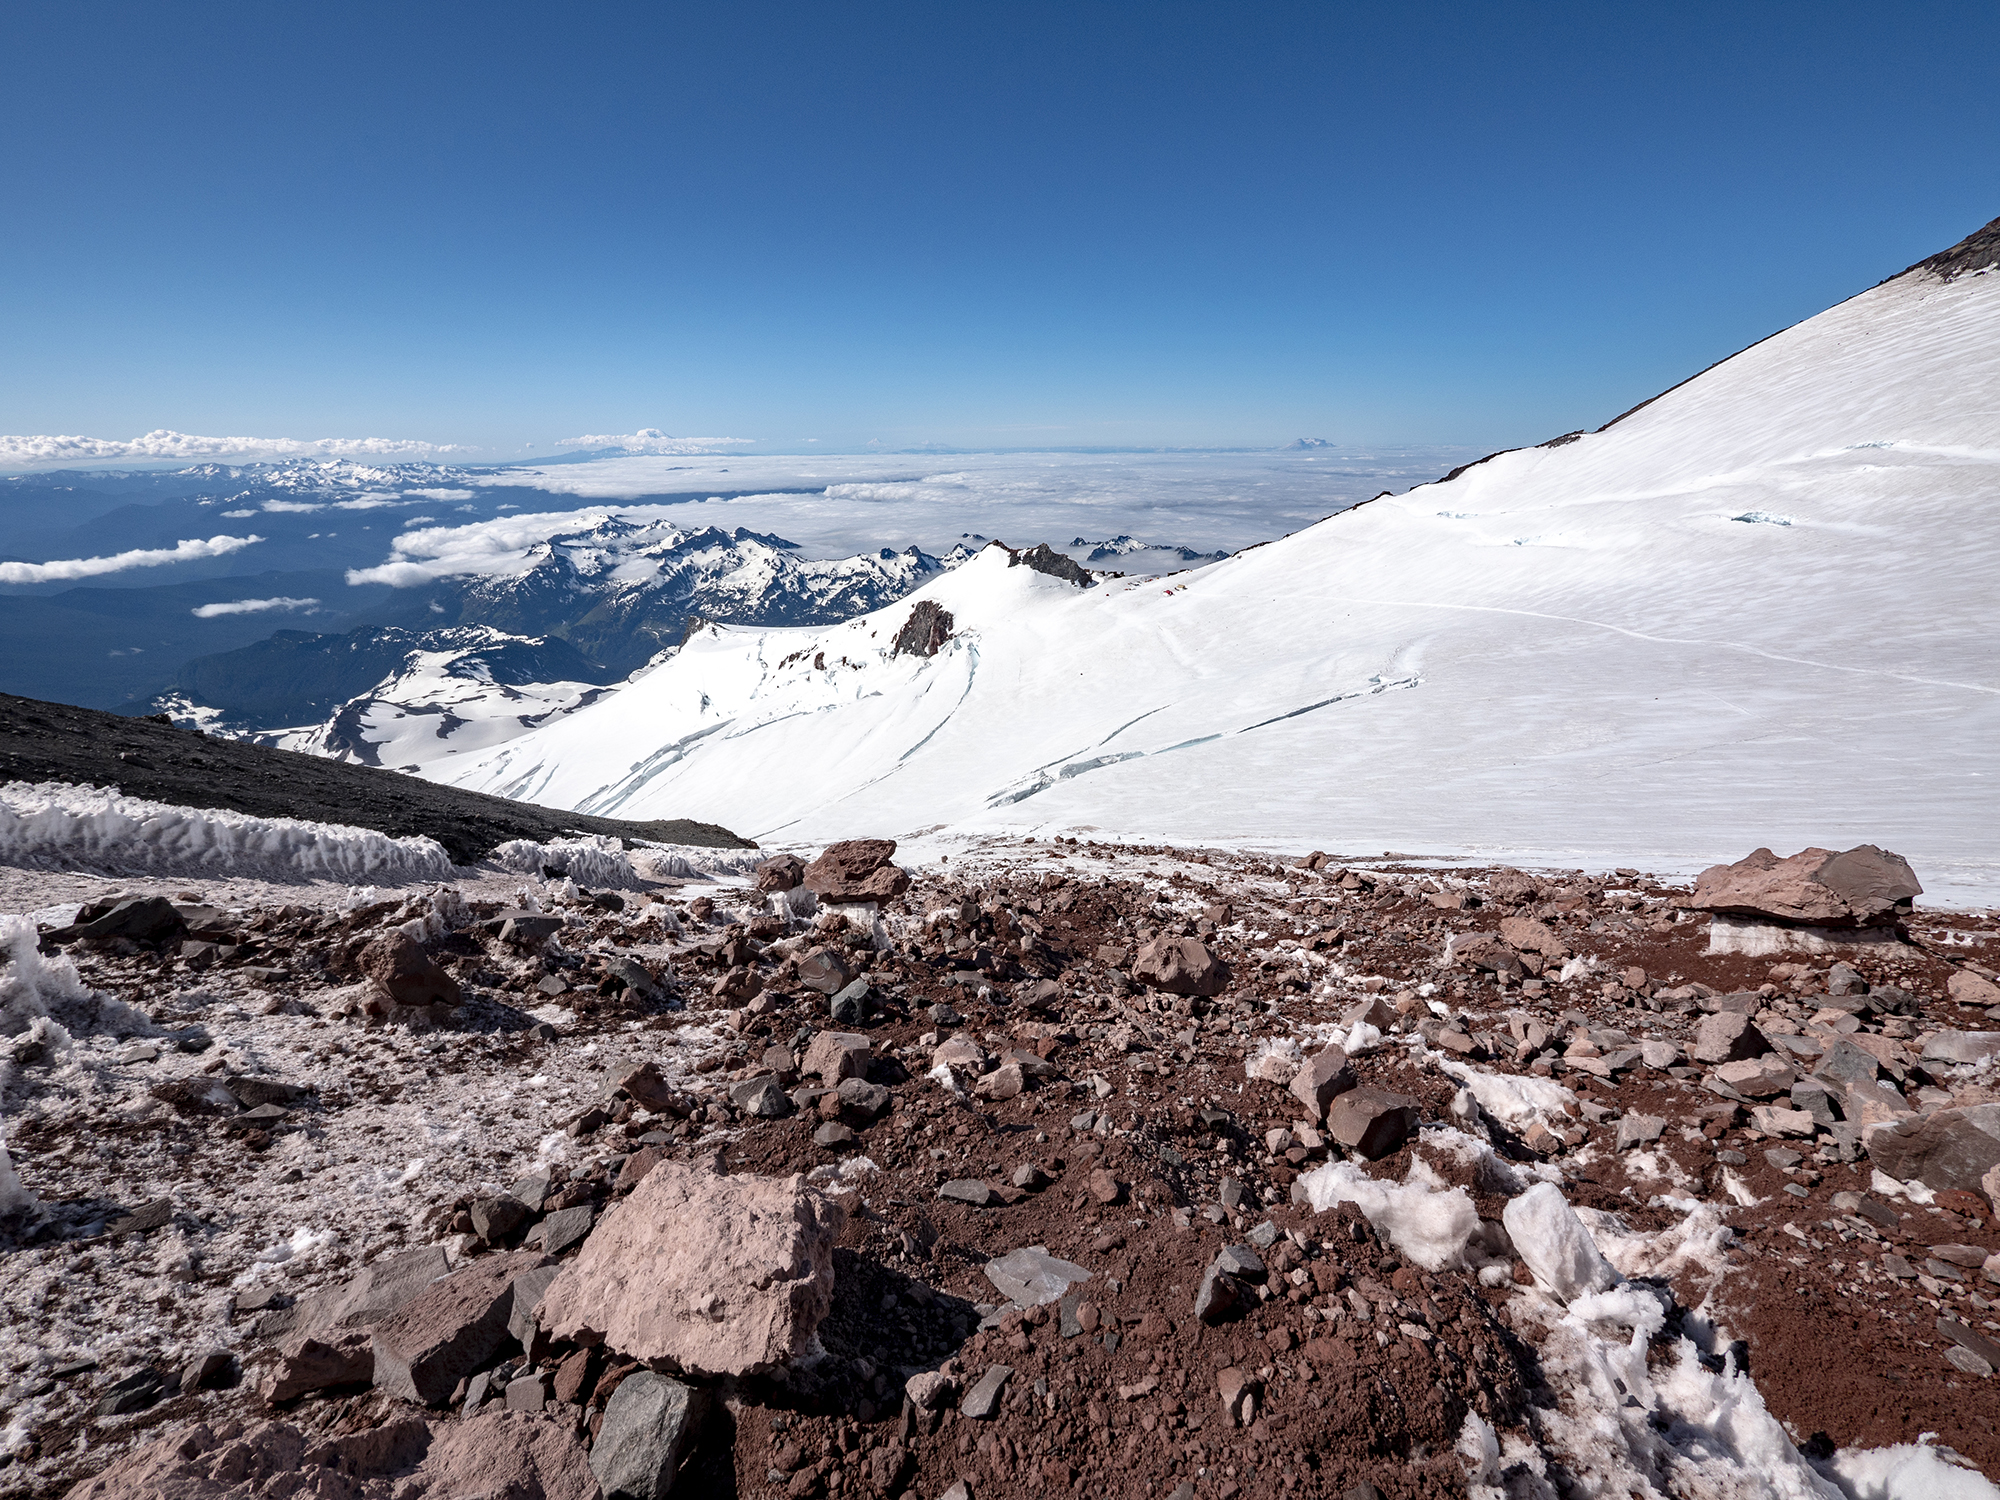 Summiting Mount Rainier